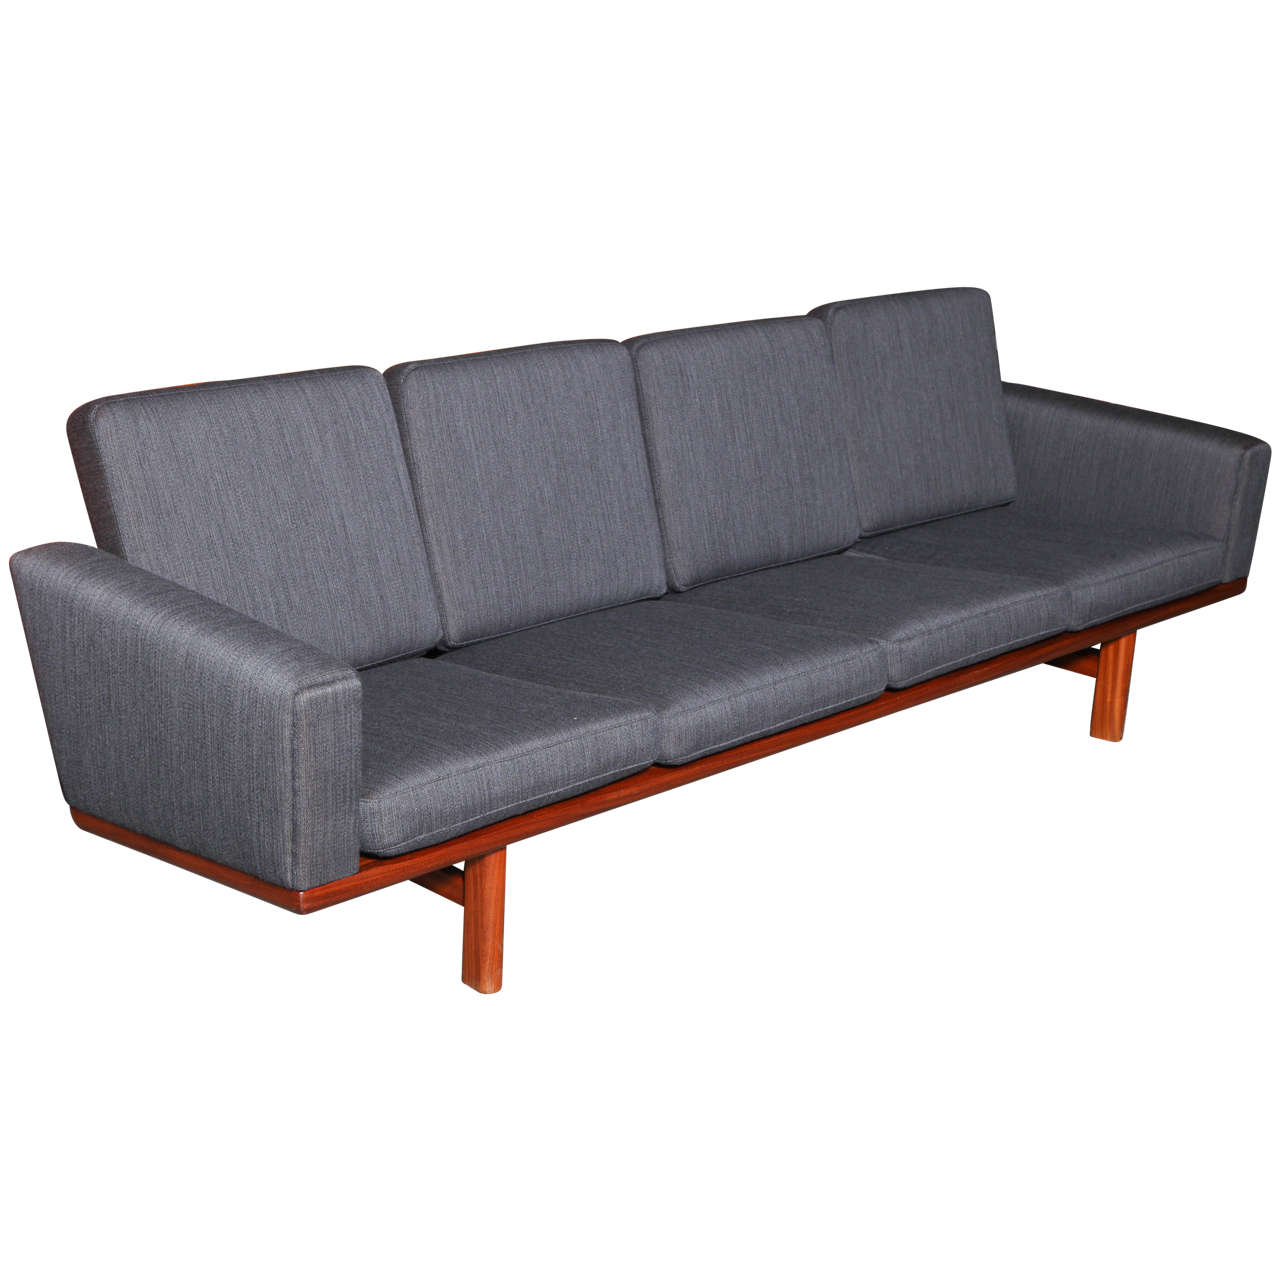 Hans Wegner GE-236/4 Sofa